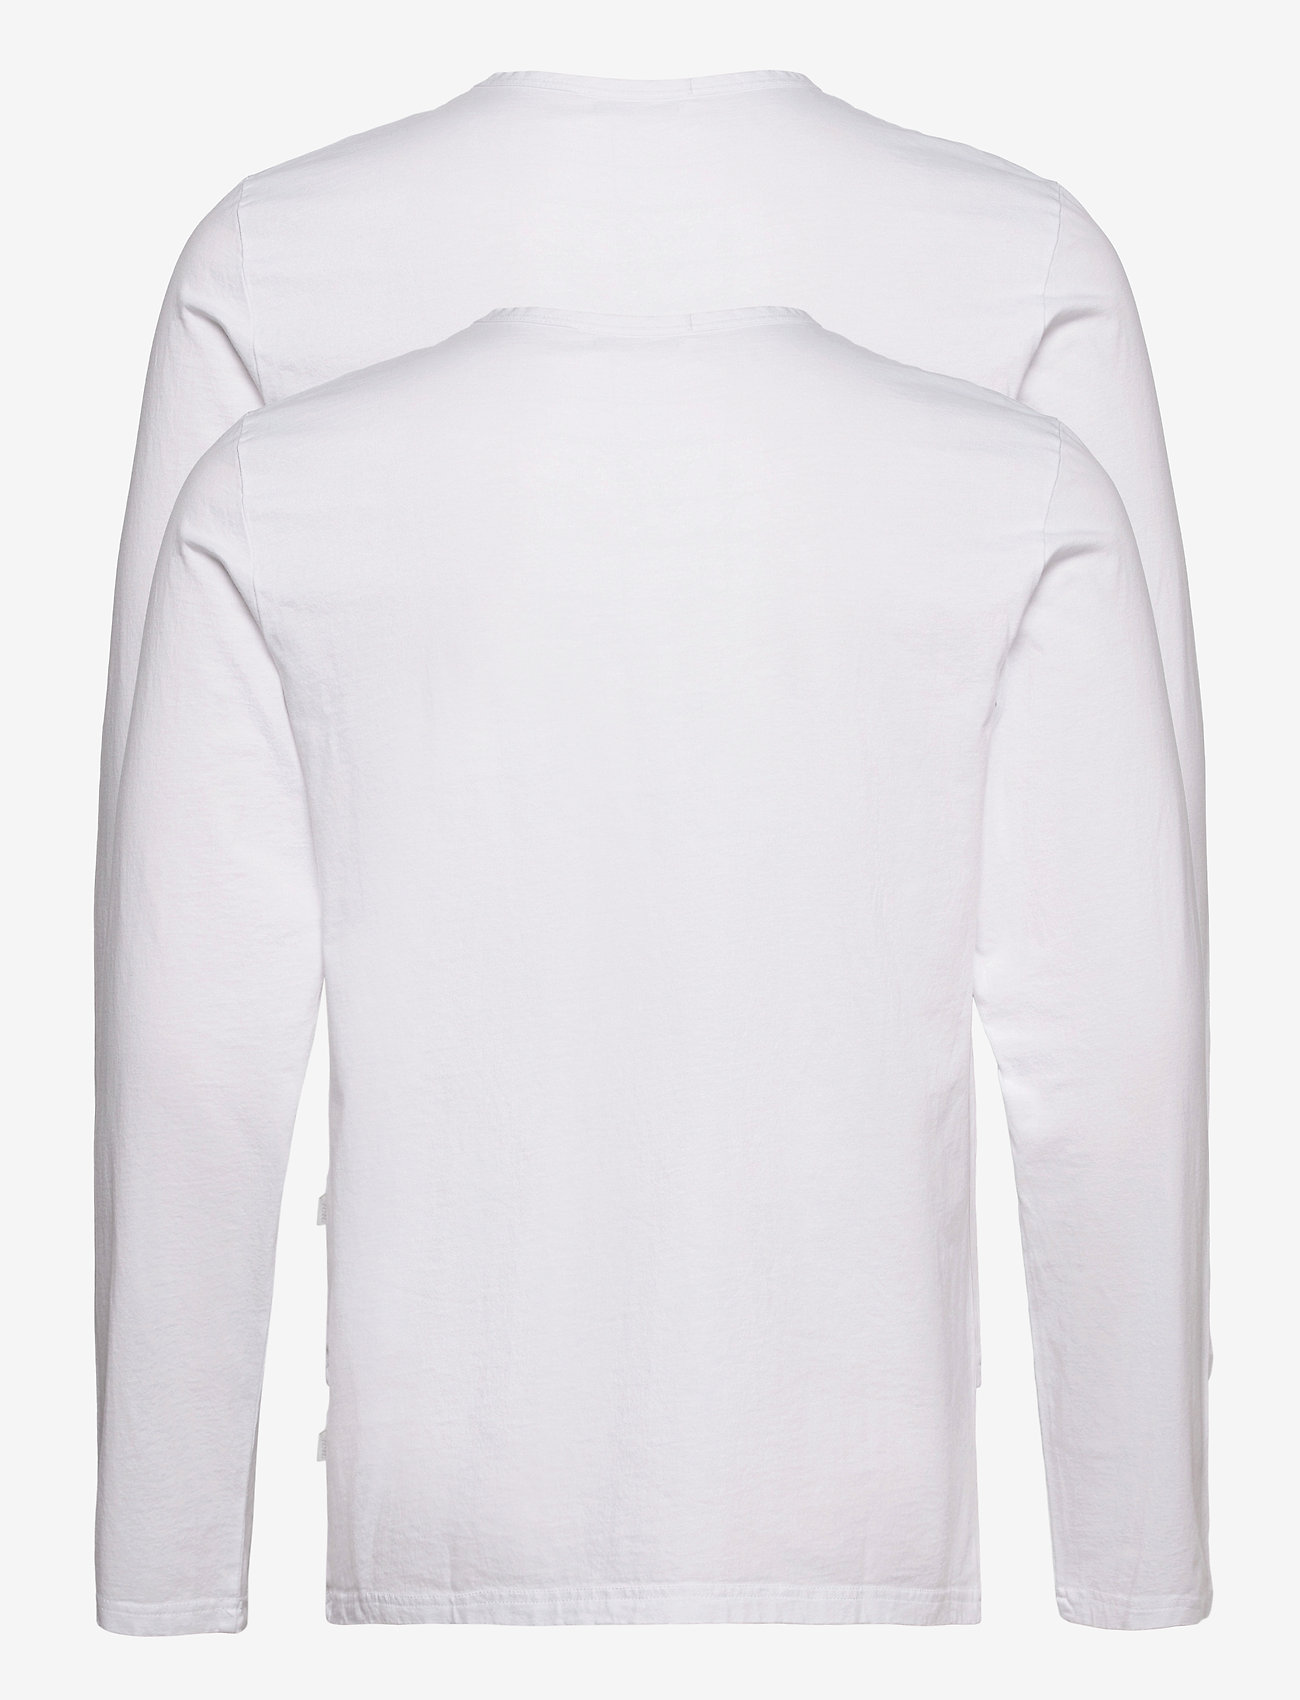 Wood Wood - Emil 2-pack long sleeve - podstawowe koszulki - bright white - 1